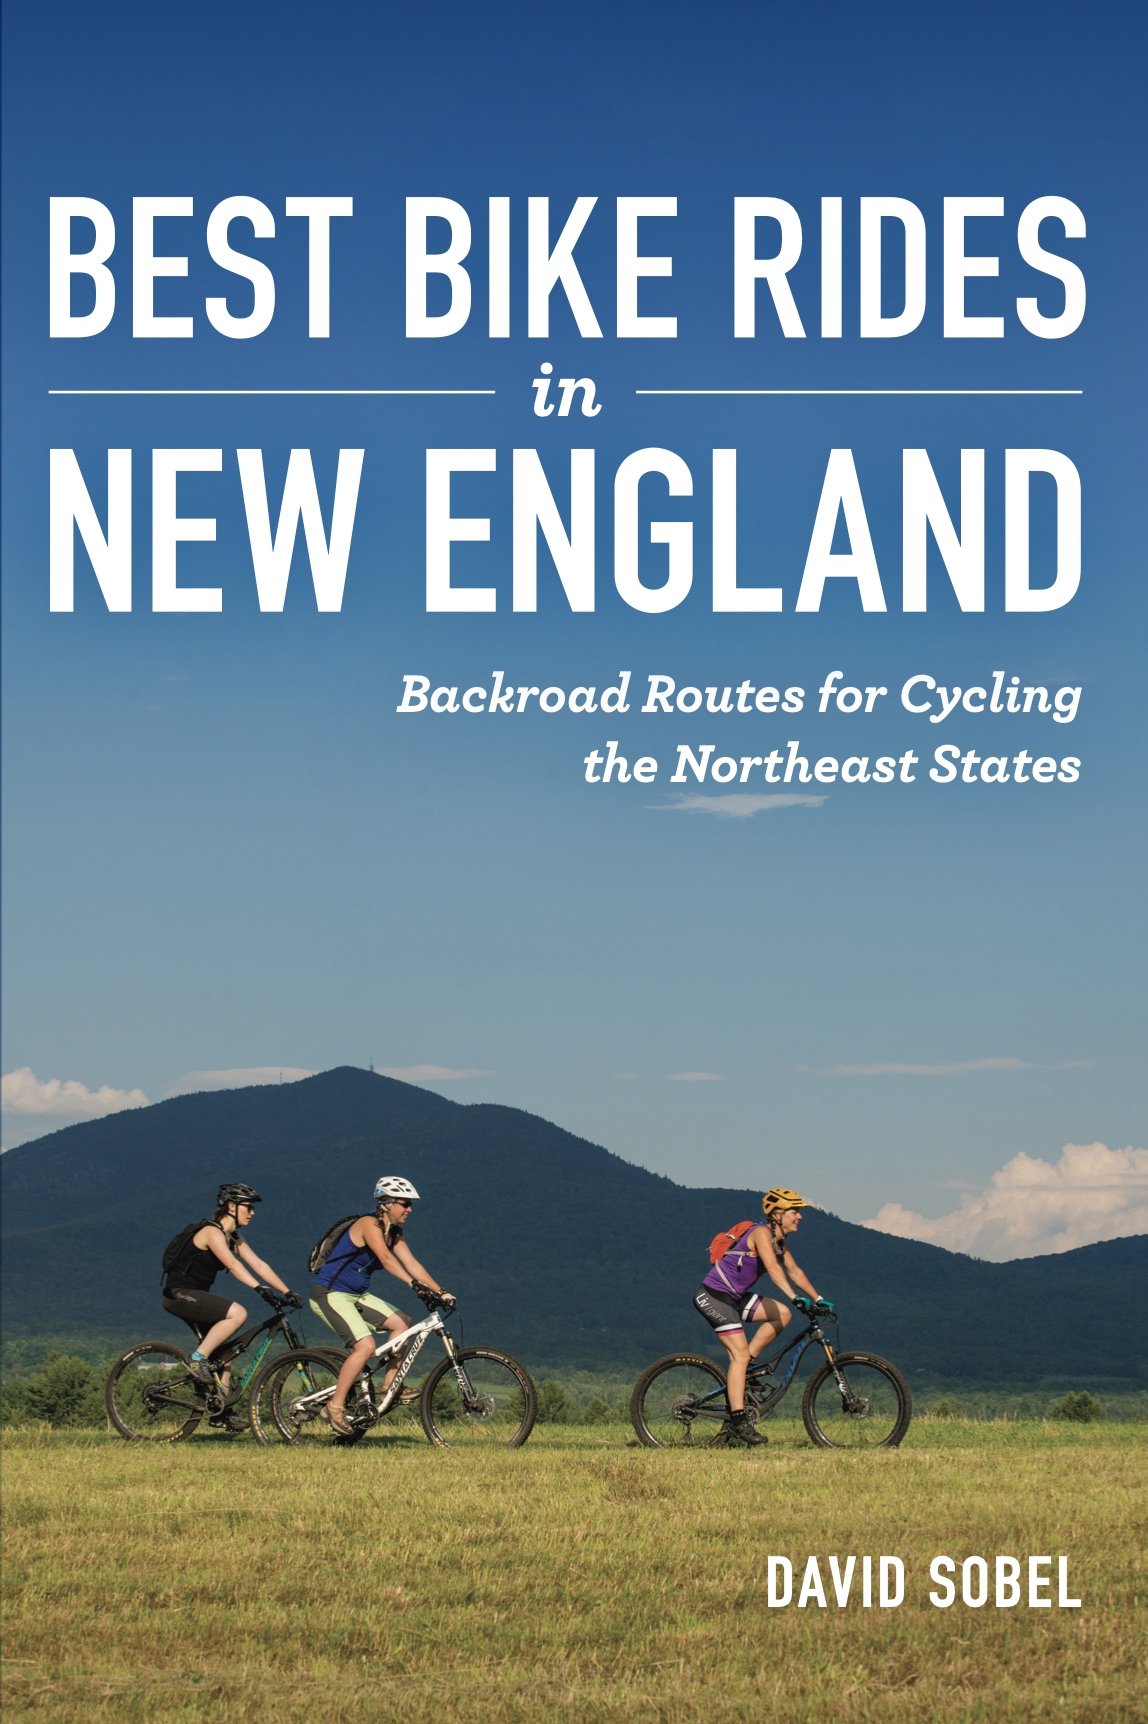 Best Bike Rides in New England-David Sobel-Cover-Higher Res.jpg